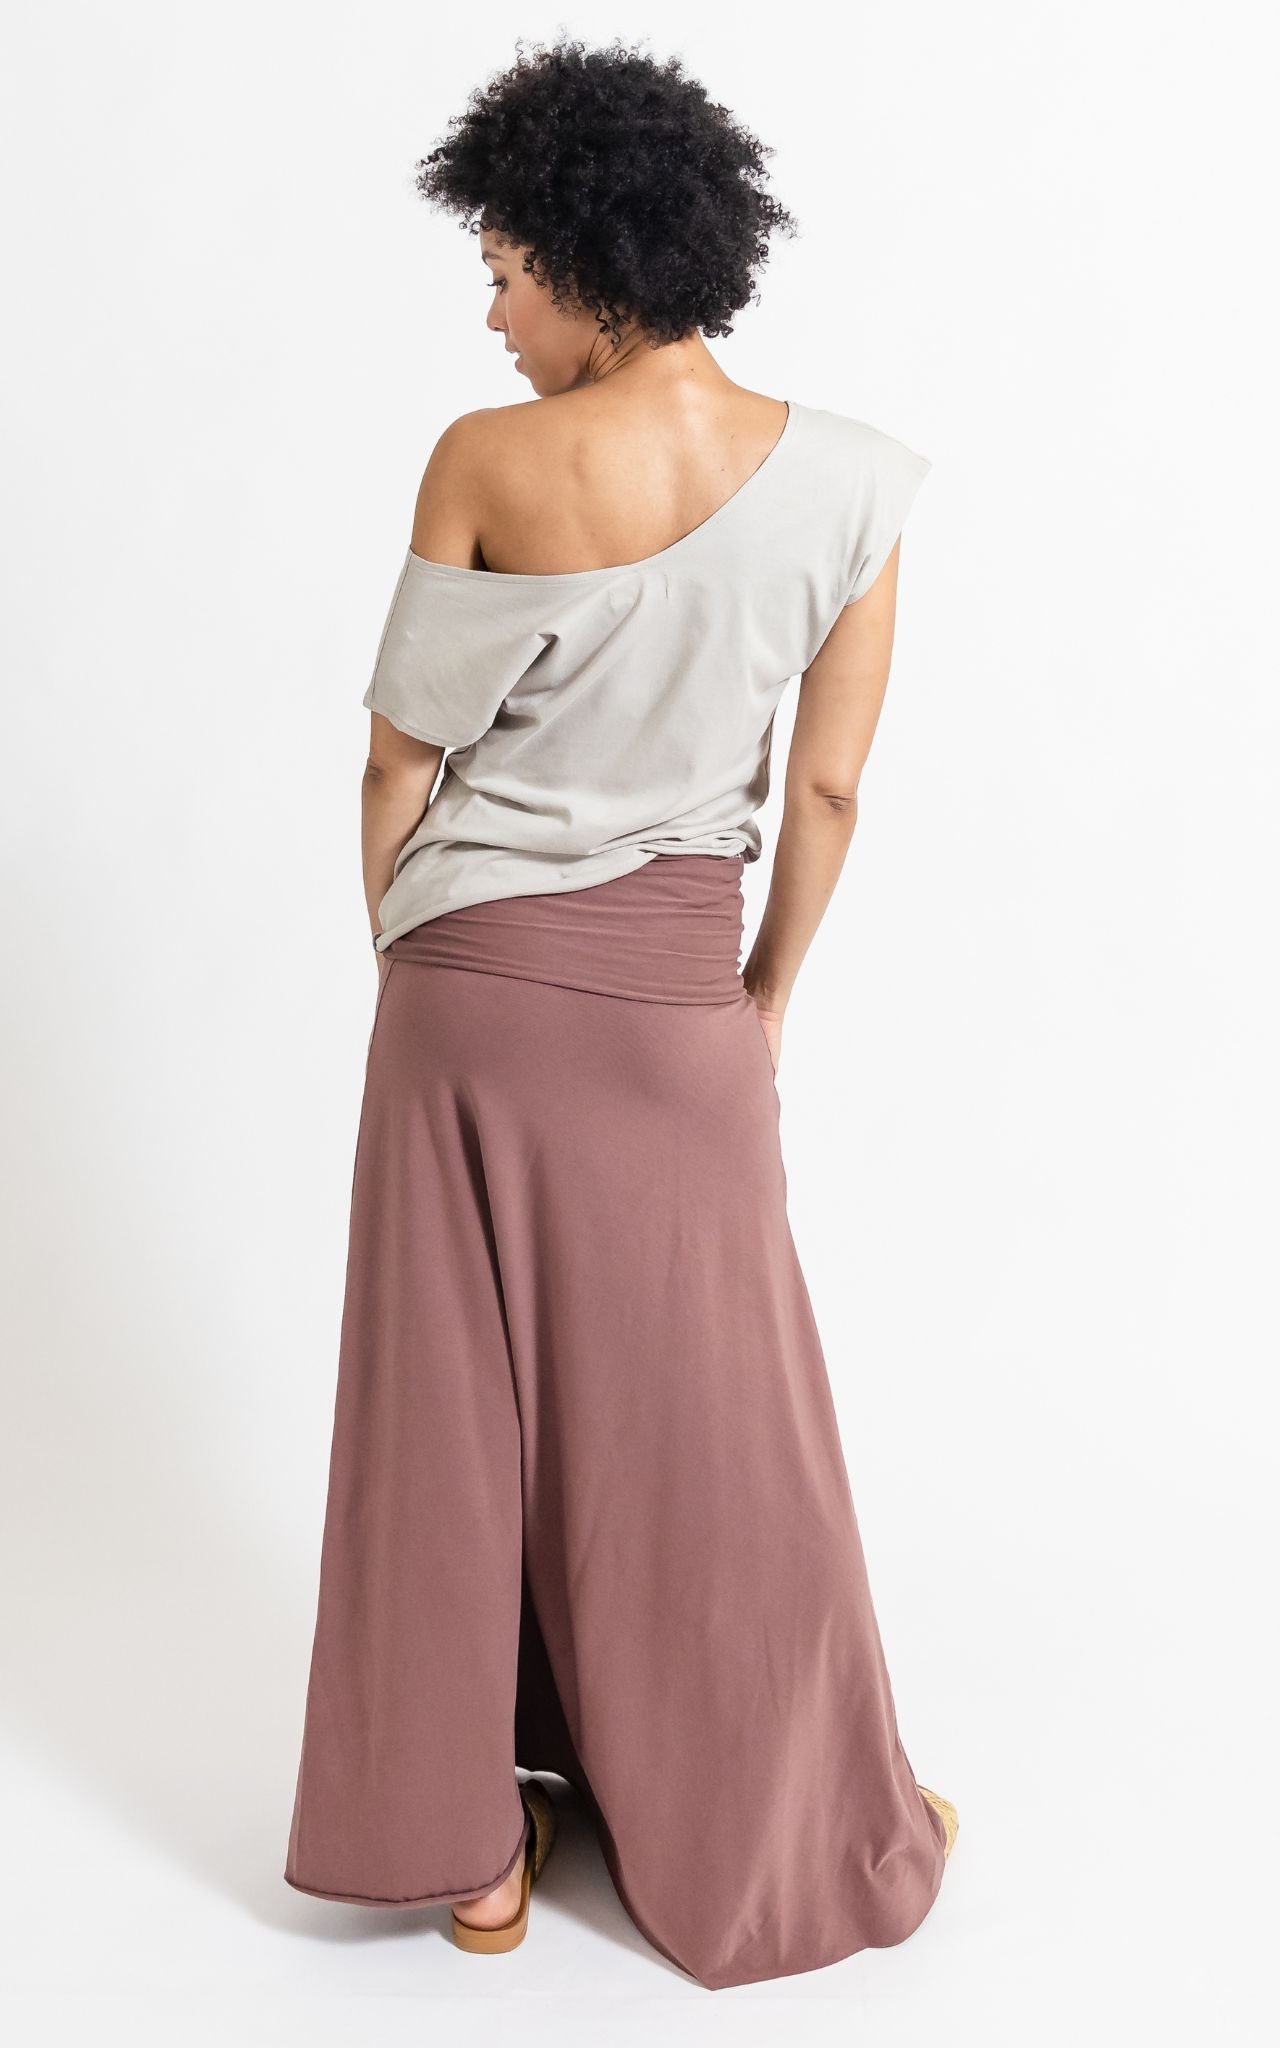 Surya Australia Organic Cotton Maxi 'Sonder' Skirt made in Nepal - Dusty Mauve